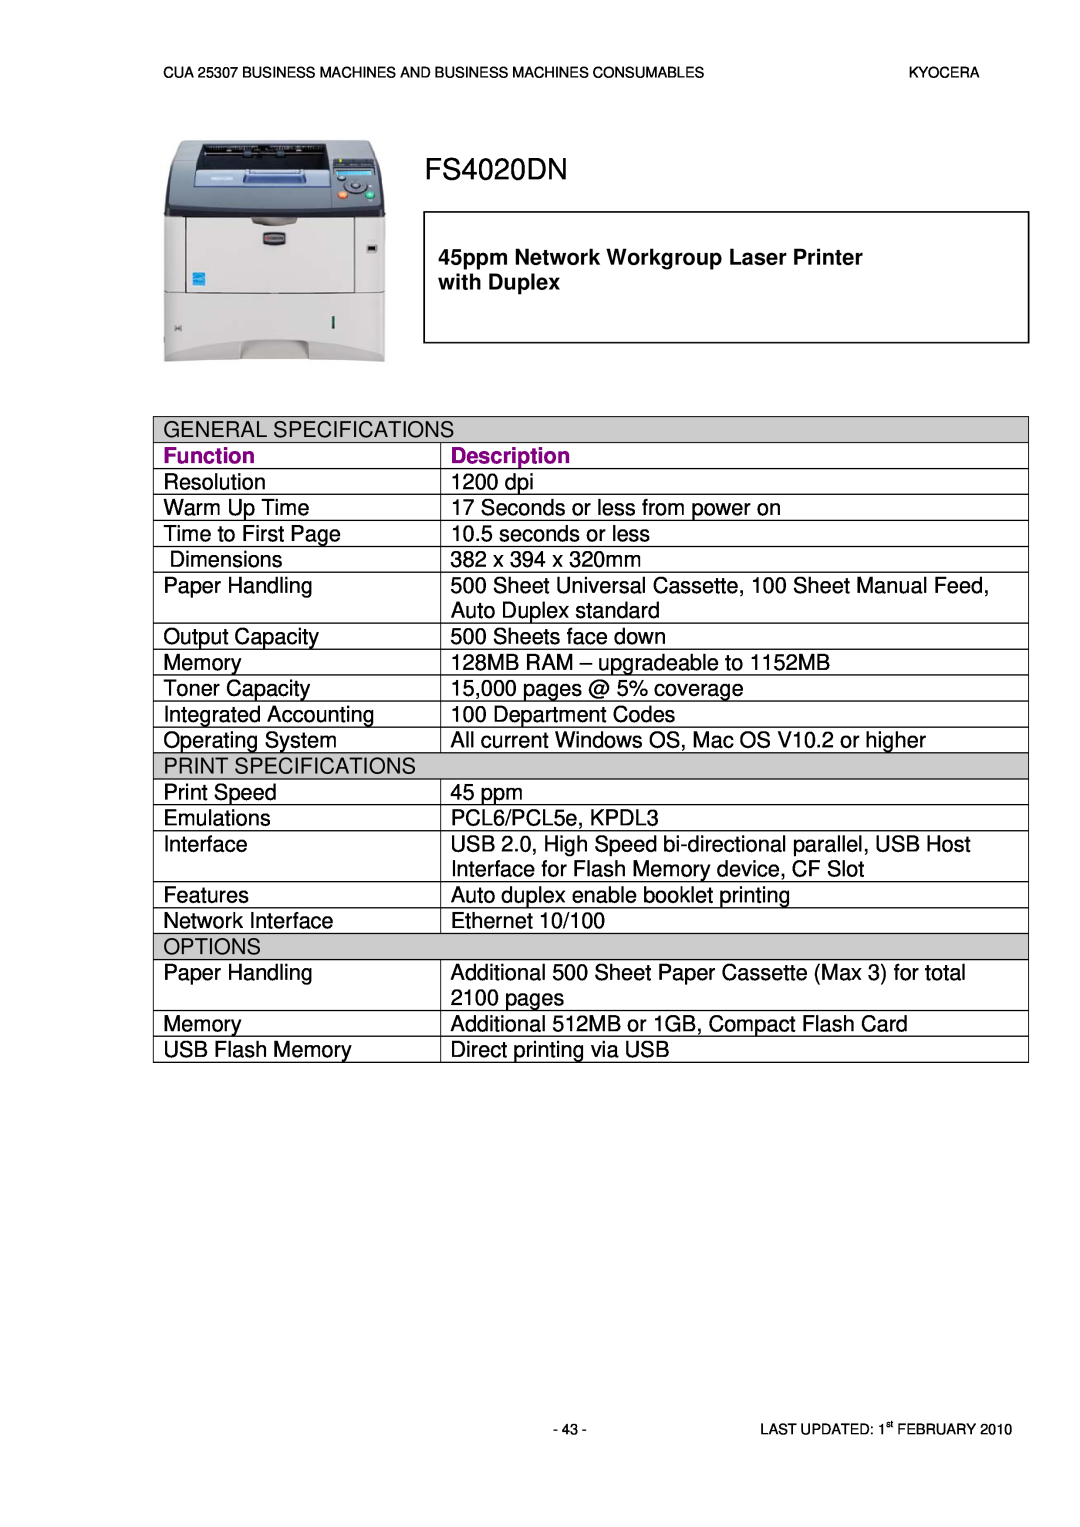 Kyocera CUA 25307 manual FS4020DN, 45ppm Network Workgroup Laser Printer with Duplex, Function, Description 1200 dpi 